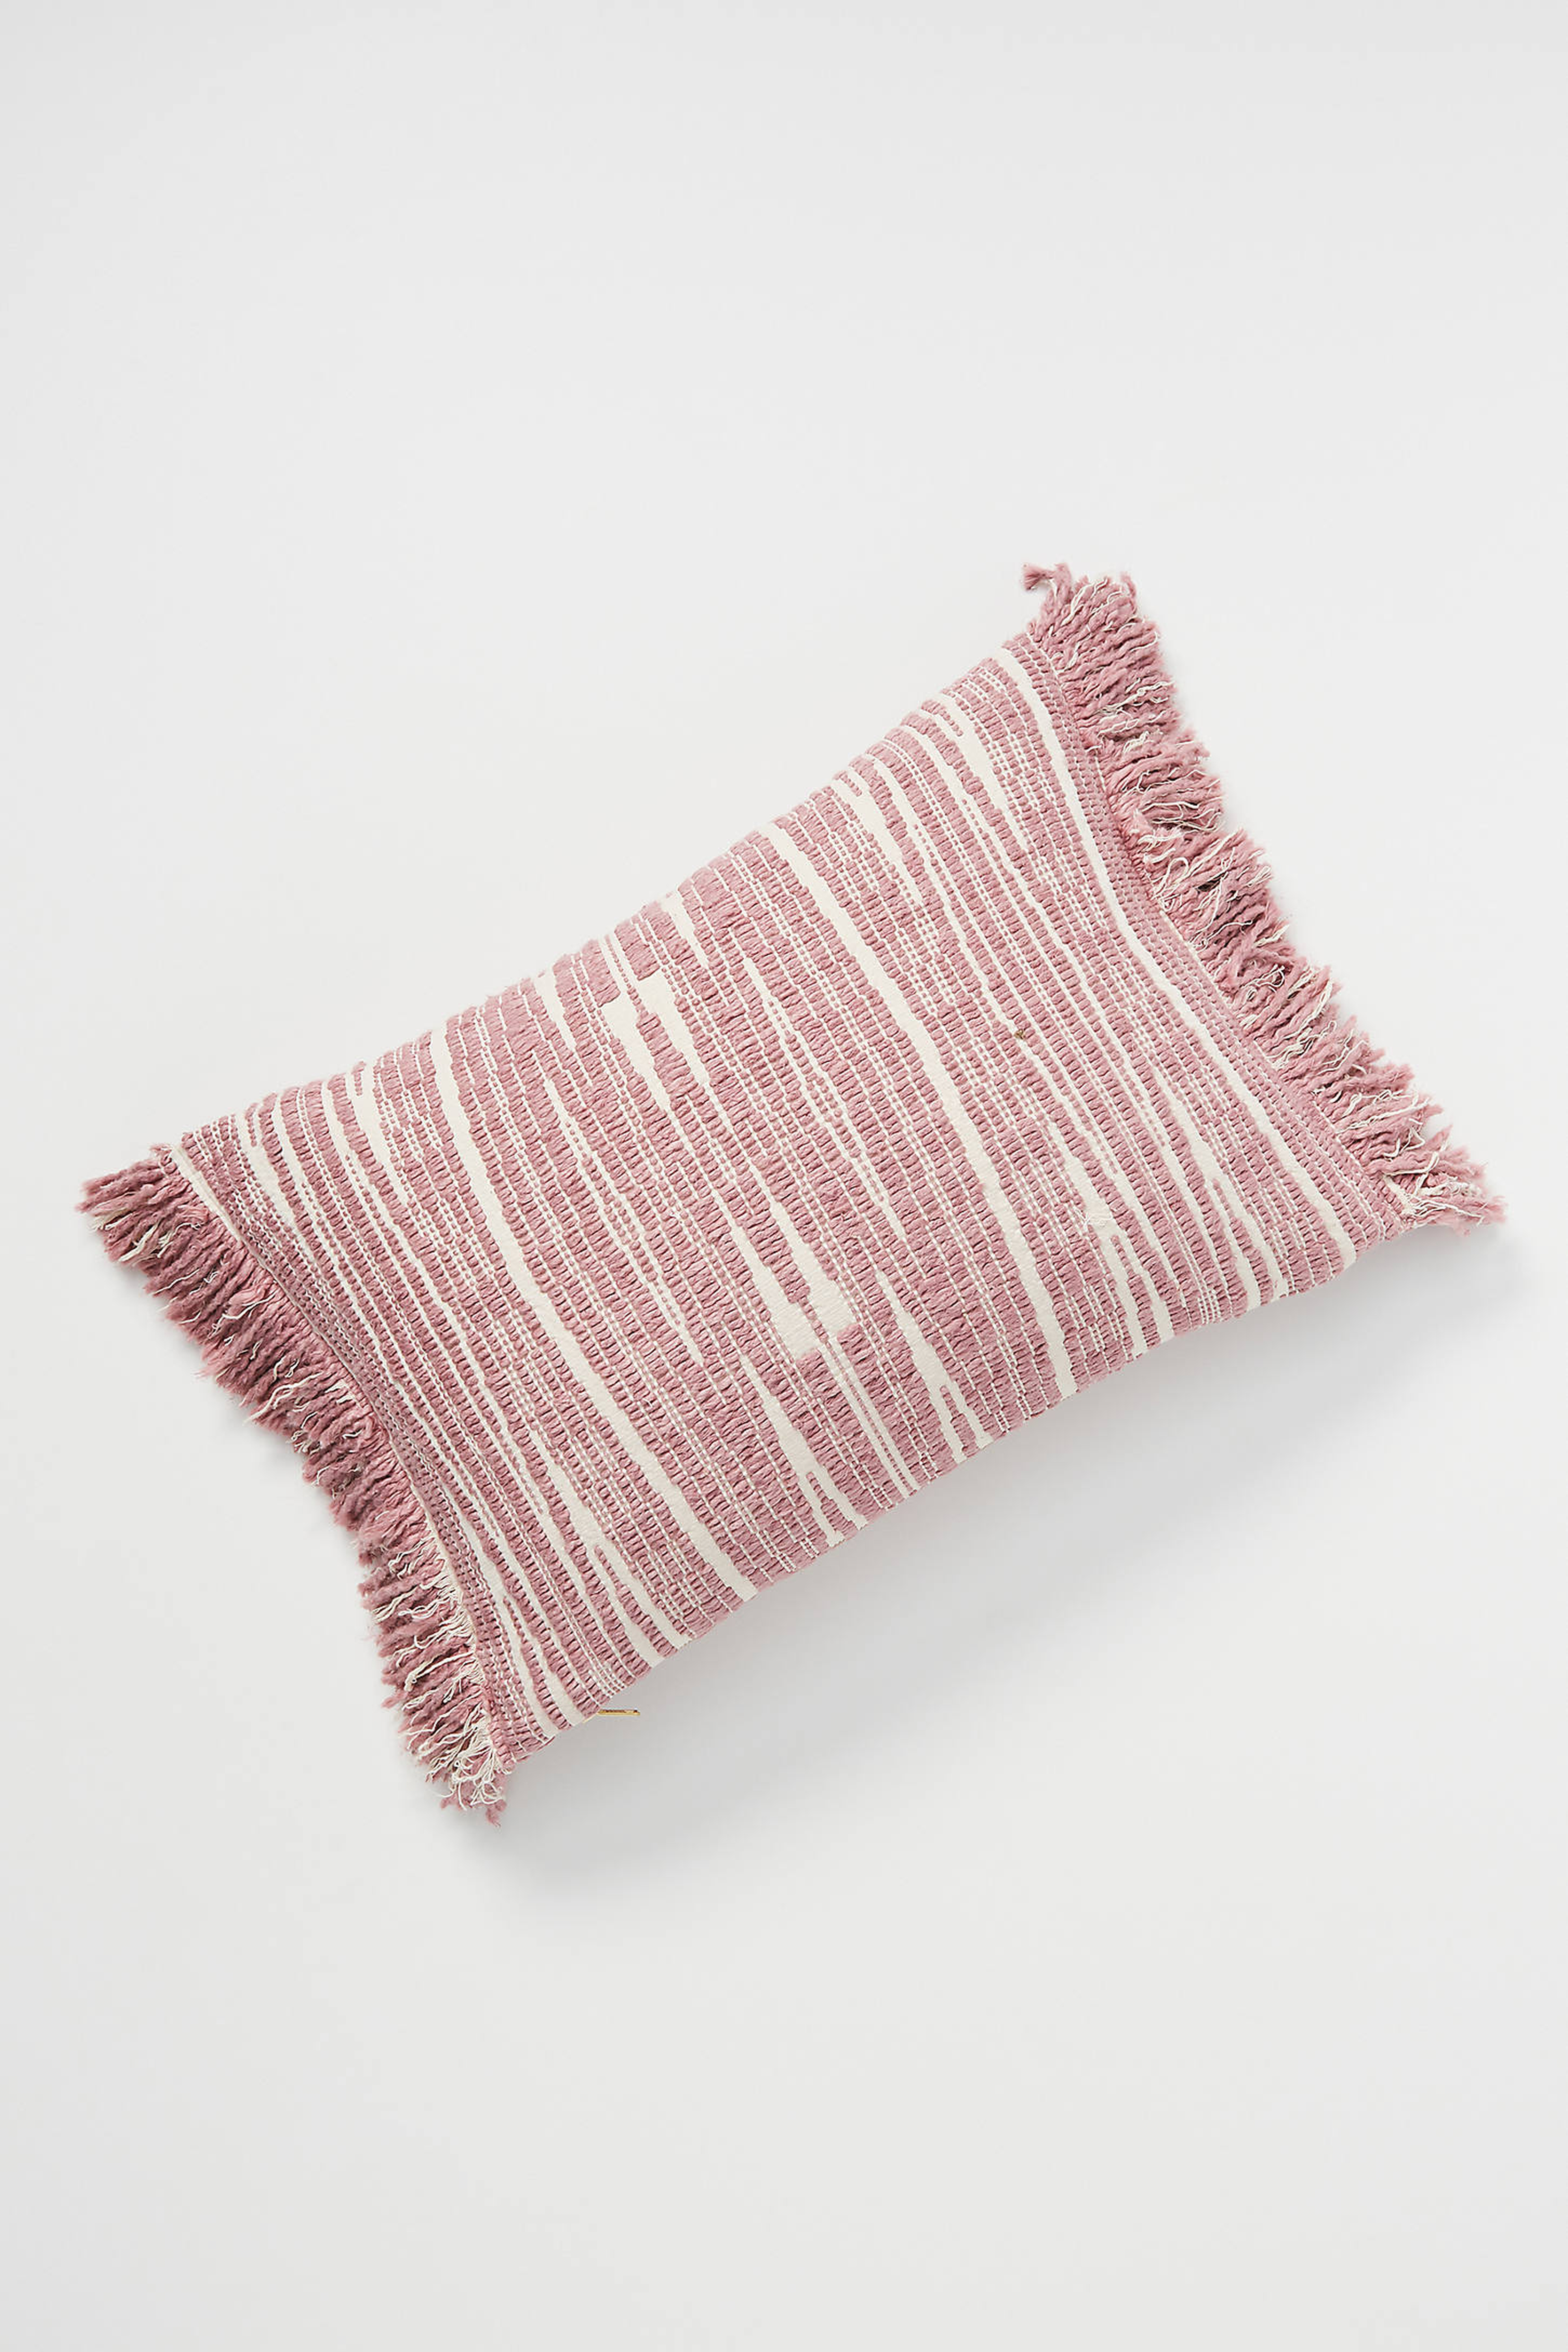 Textured Kadin Pillow - Anthropologie